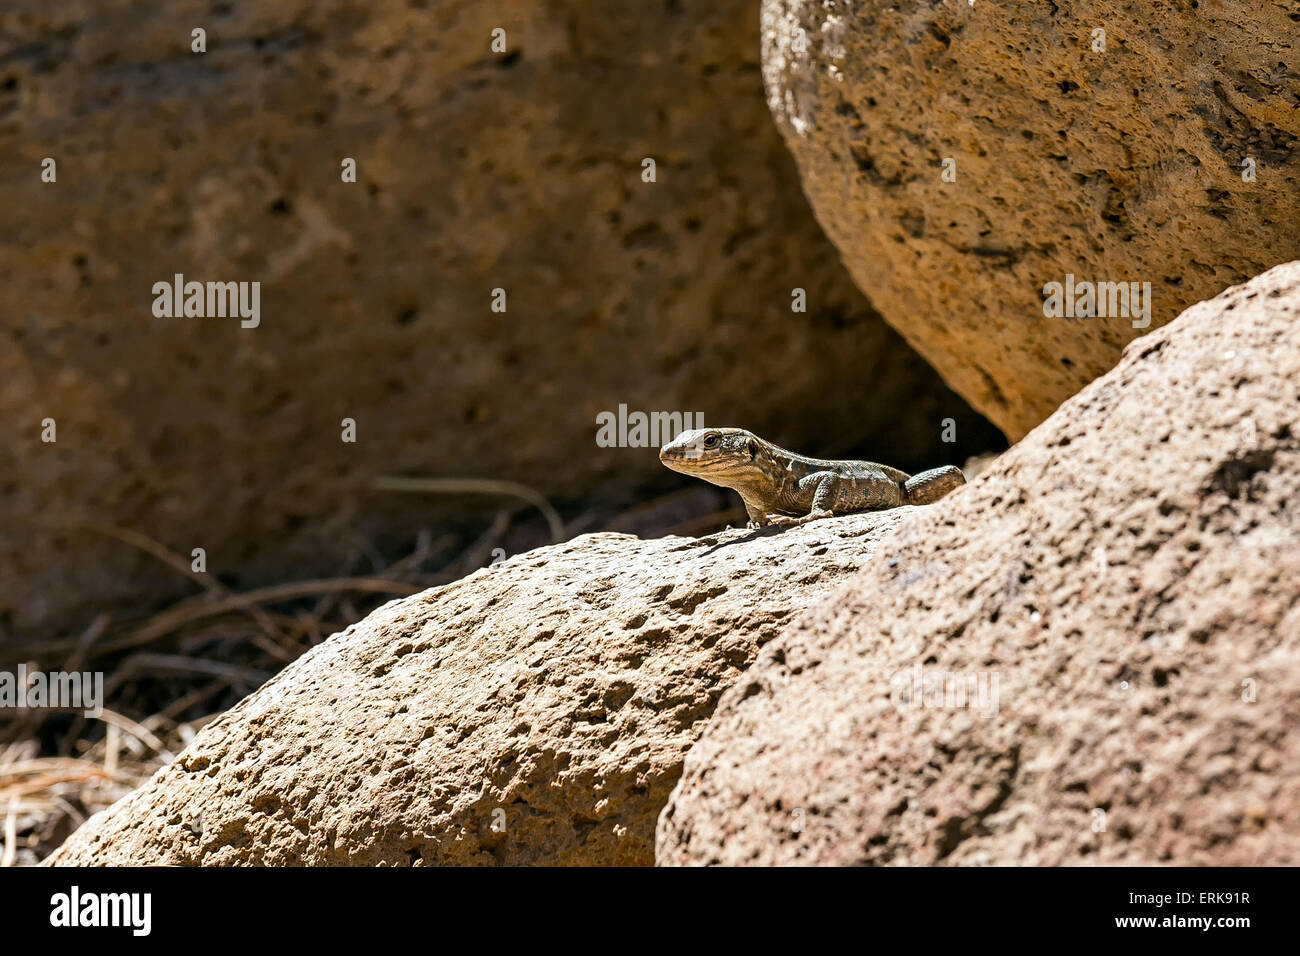 Lizard or lacertian reptile sitting on stone Stock Photo